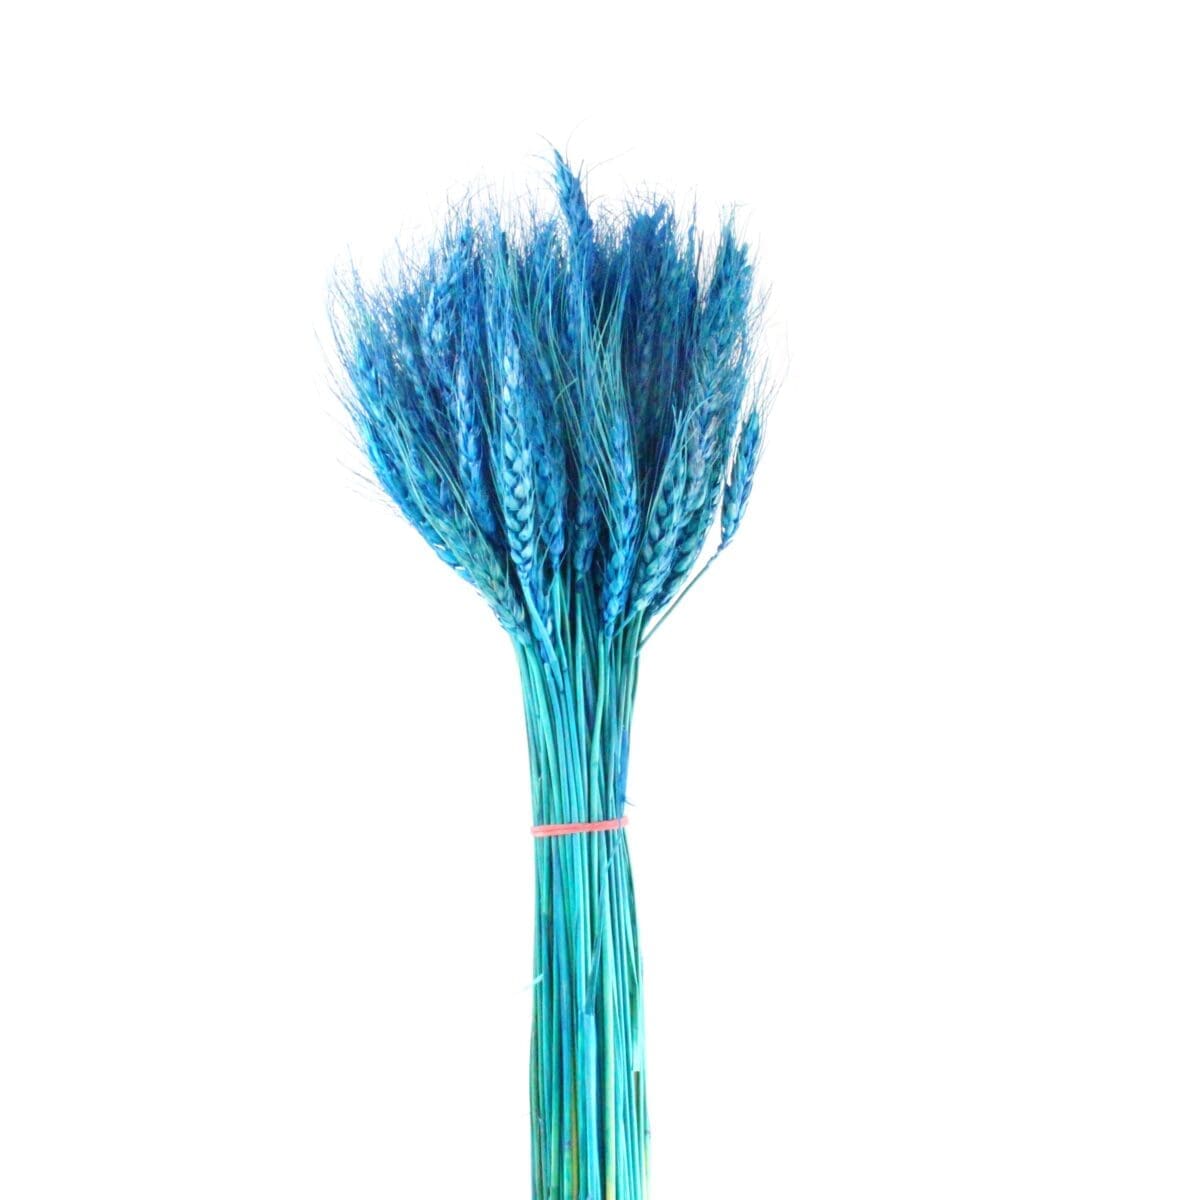 Natural Dried Flower Dry Grass Blue